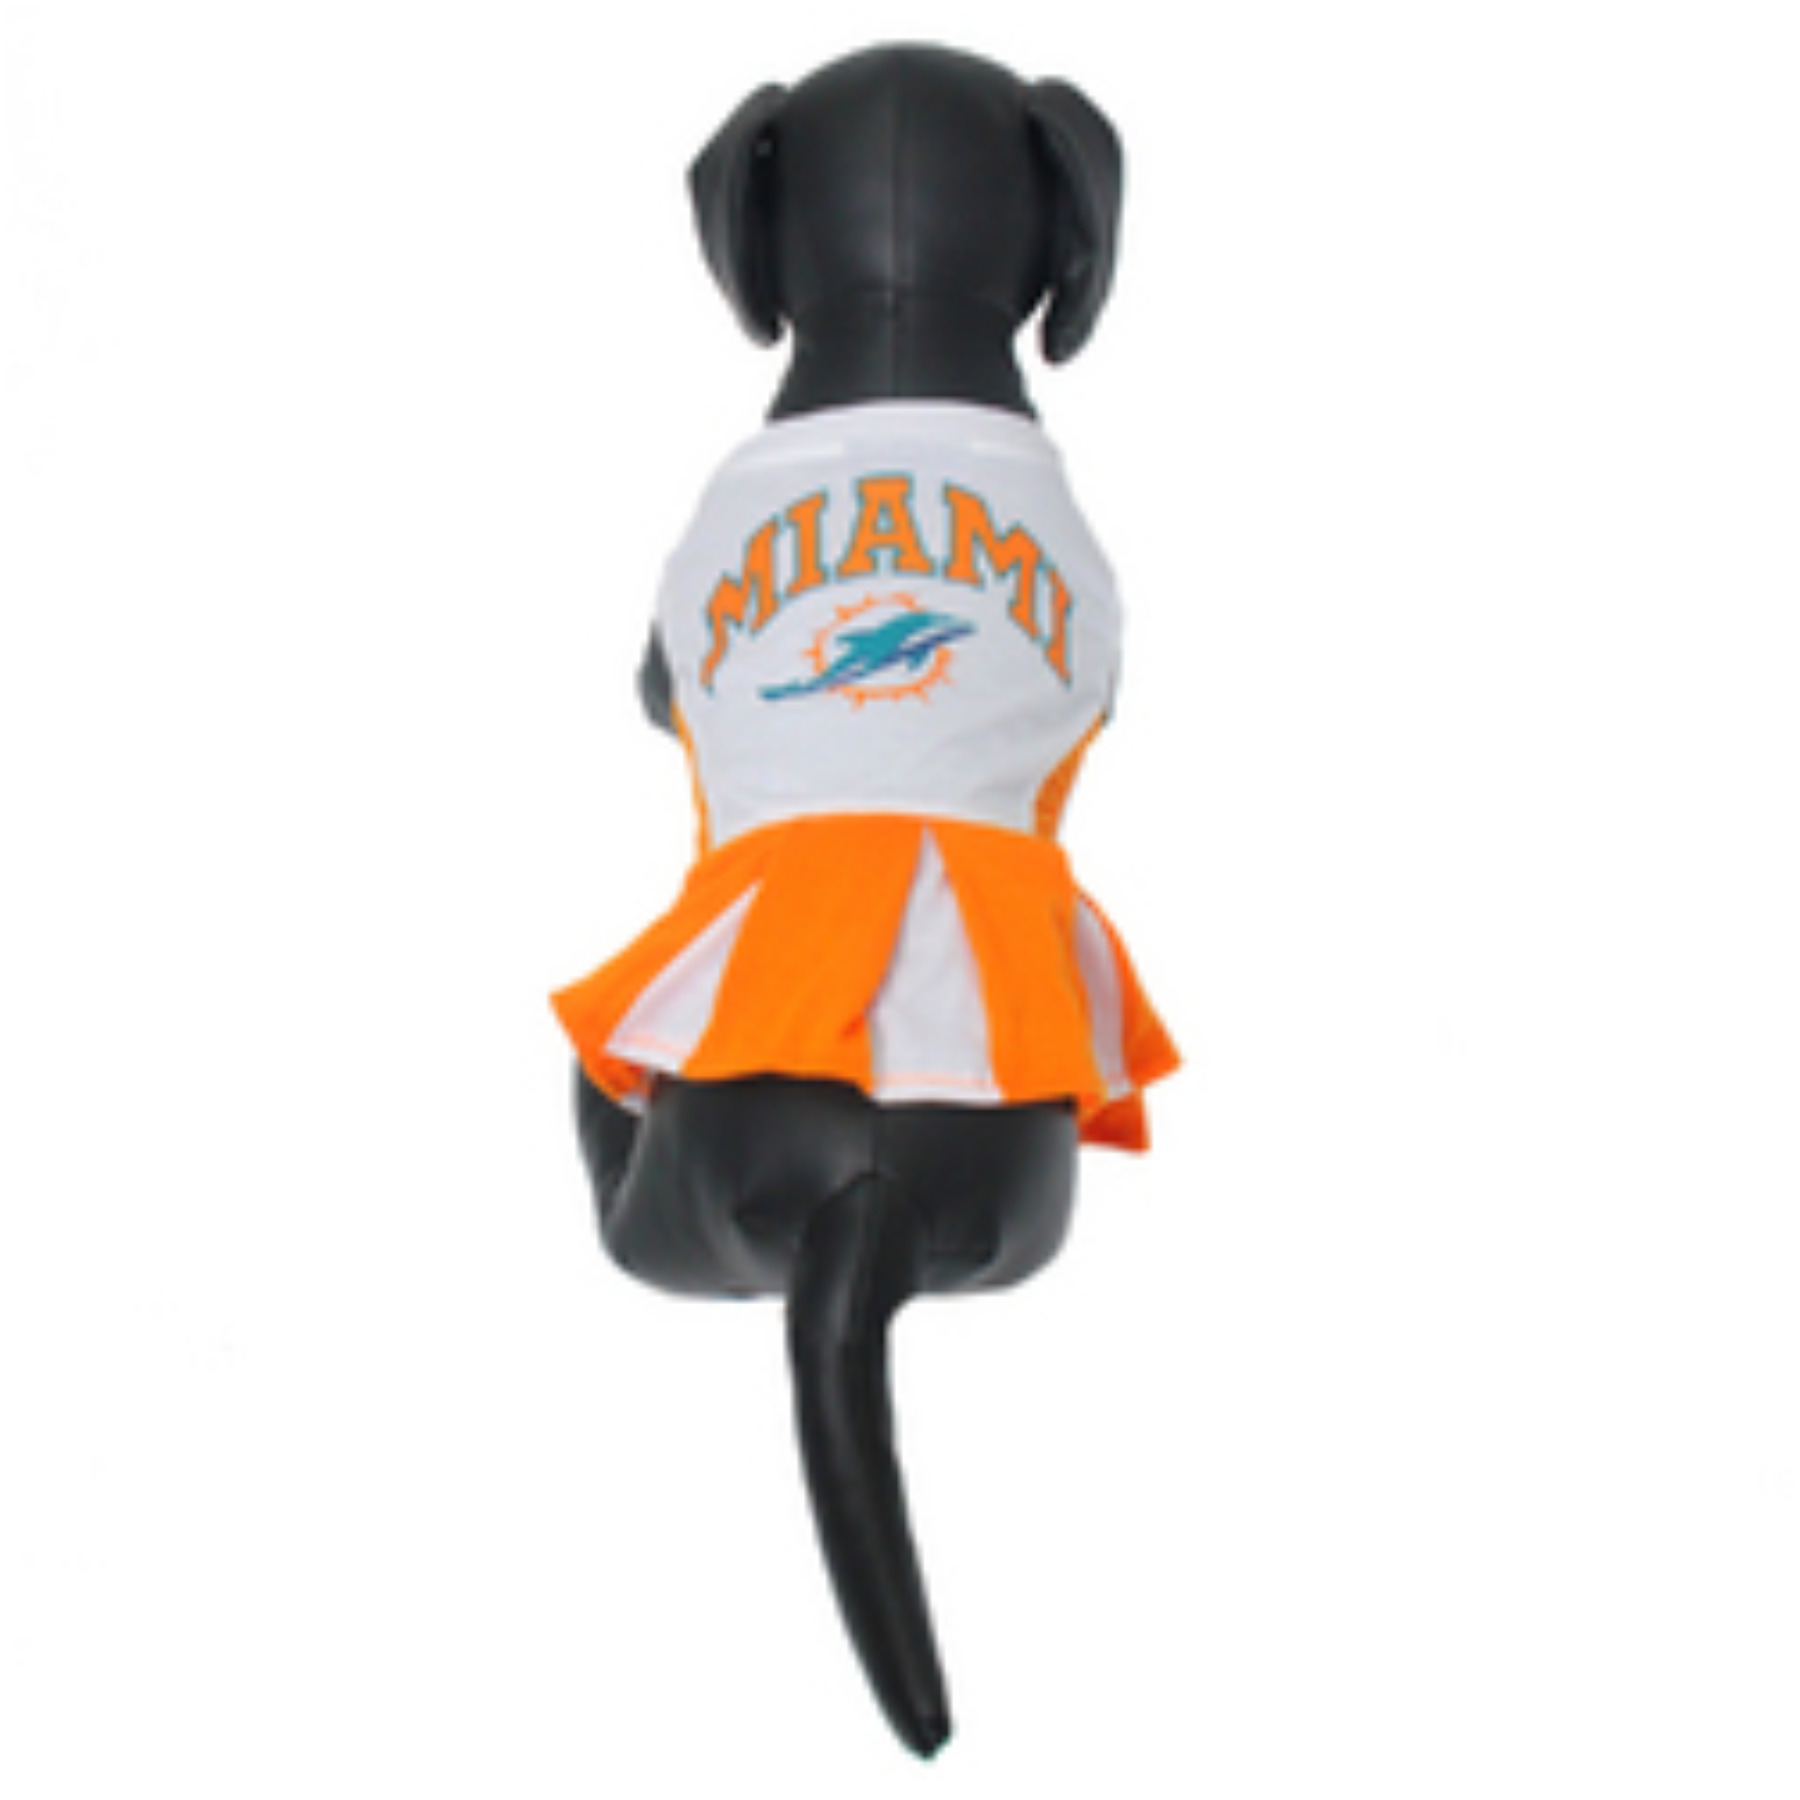 Miami Dolphins Cheerleader Dog Dress